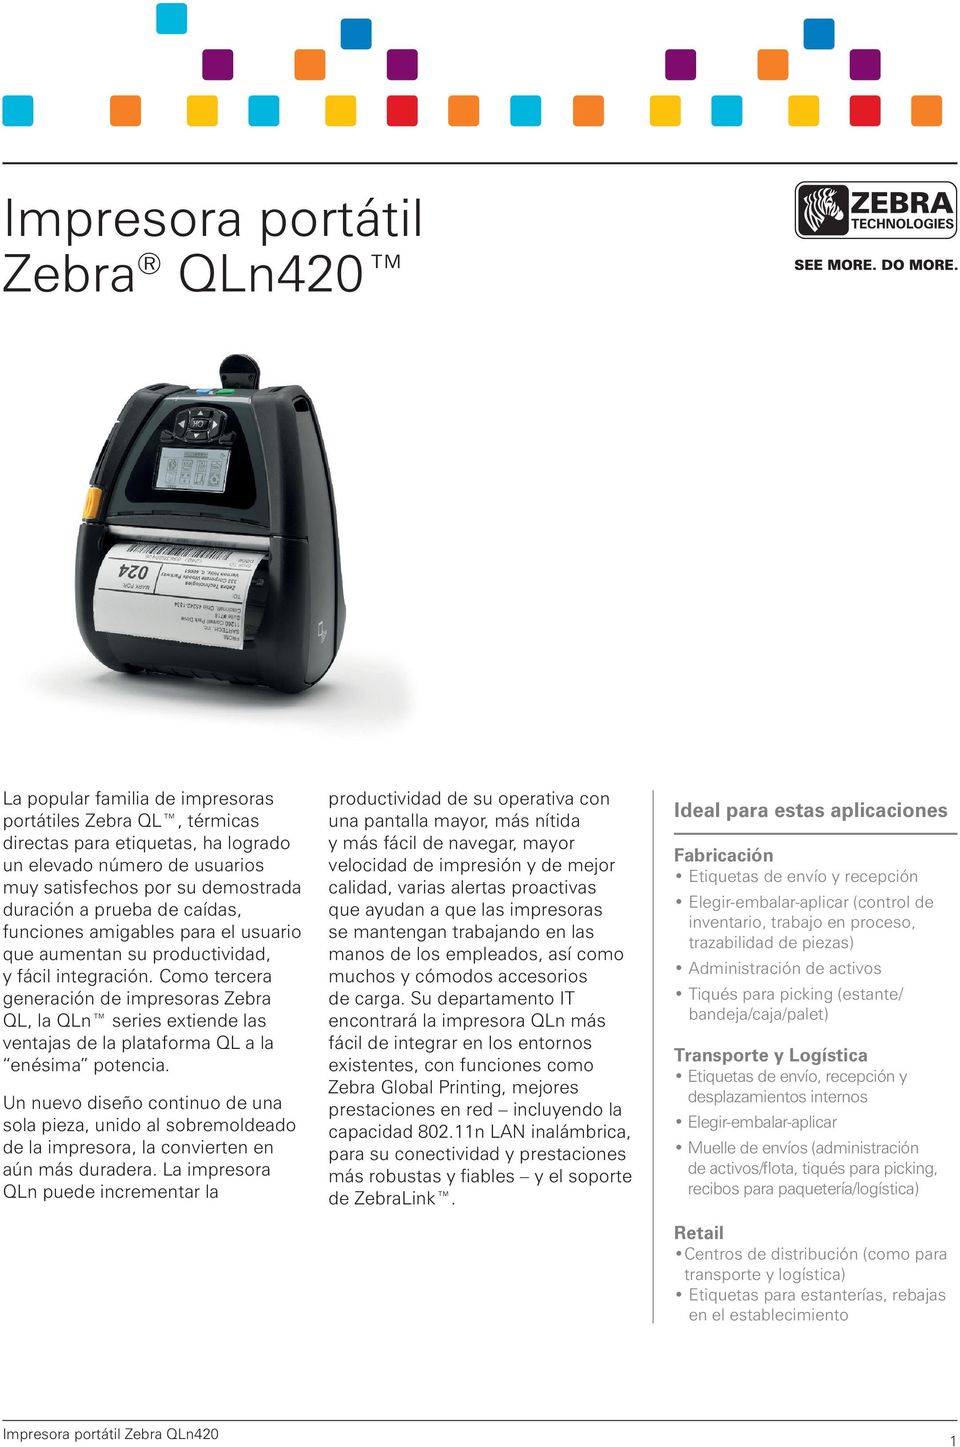 Como tercera generación de impresoras Zebra QL, la QLn series extiende las ventajas de la plataforma QL a la enésima potencia.